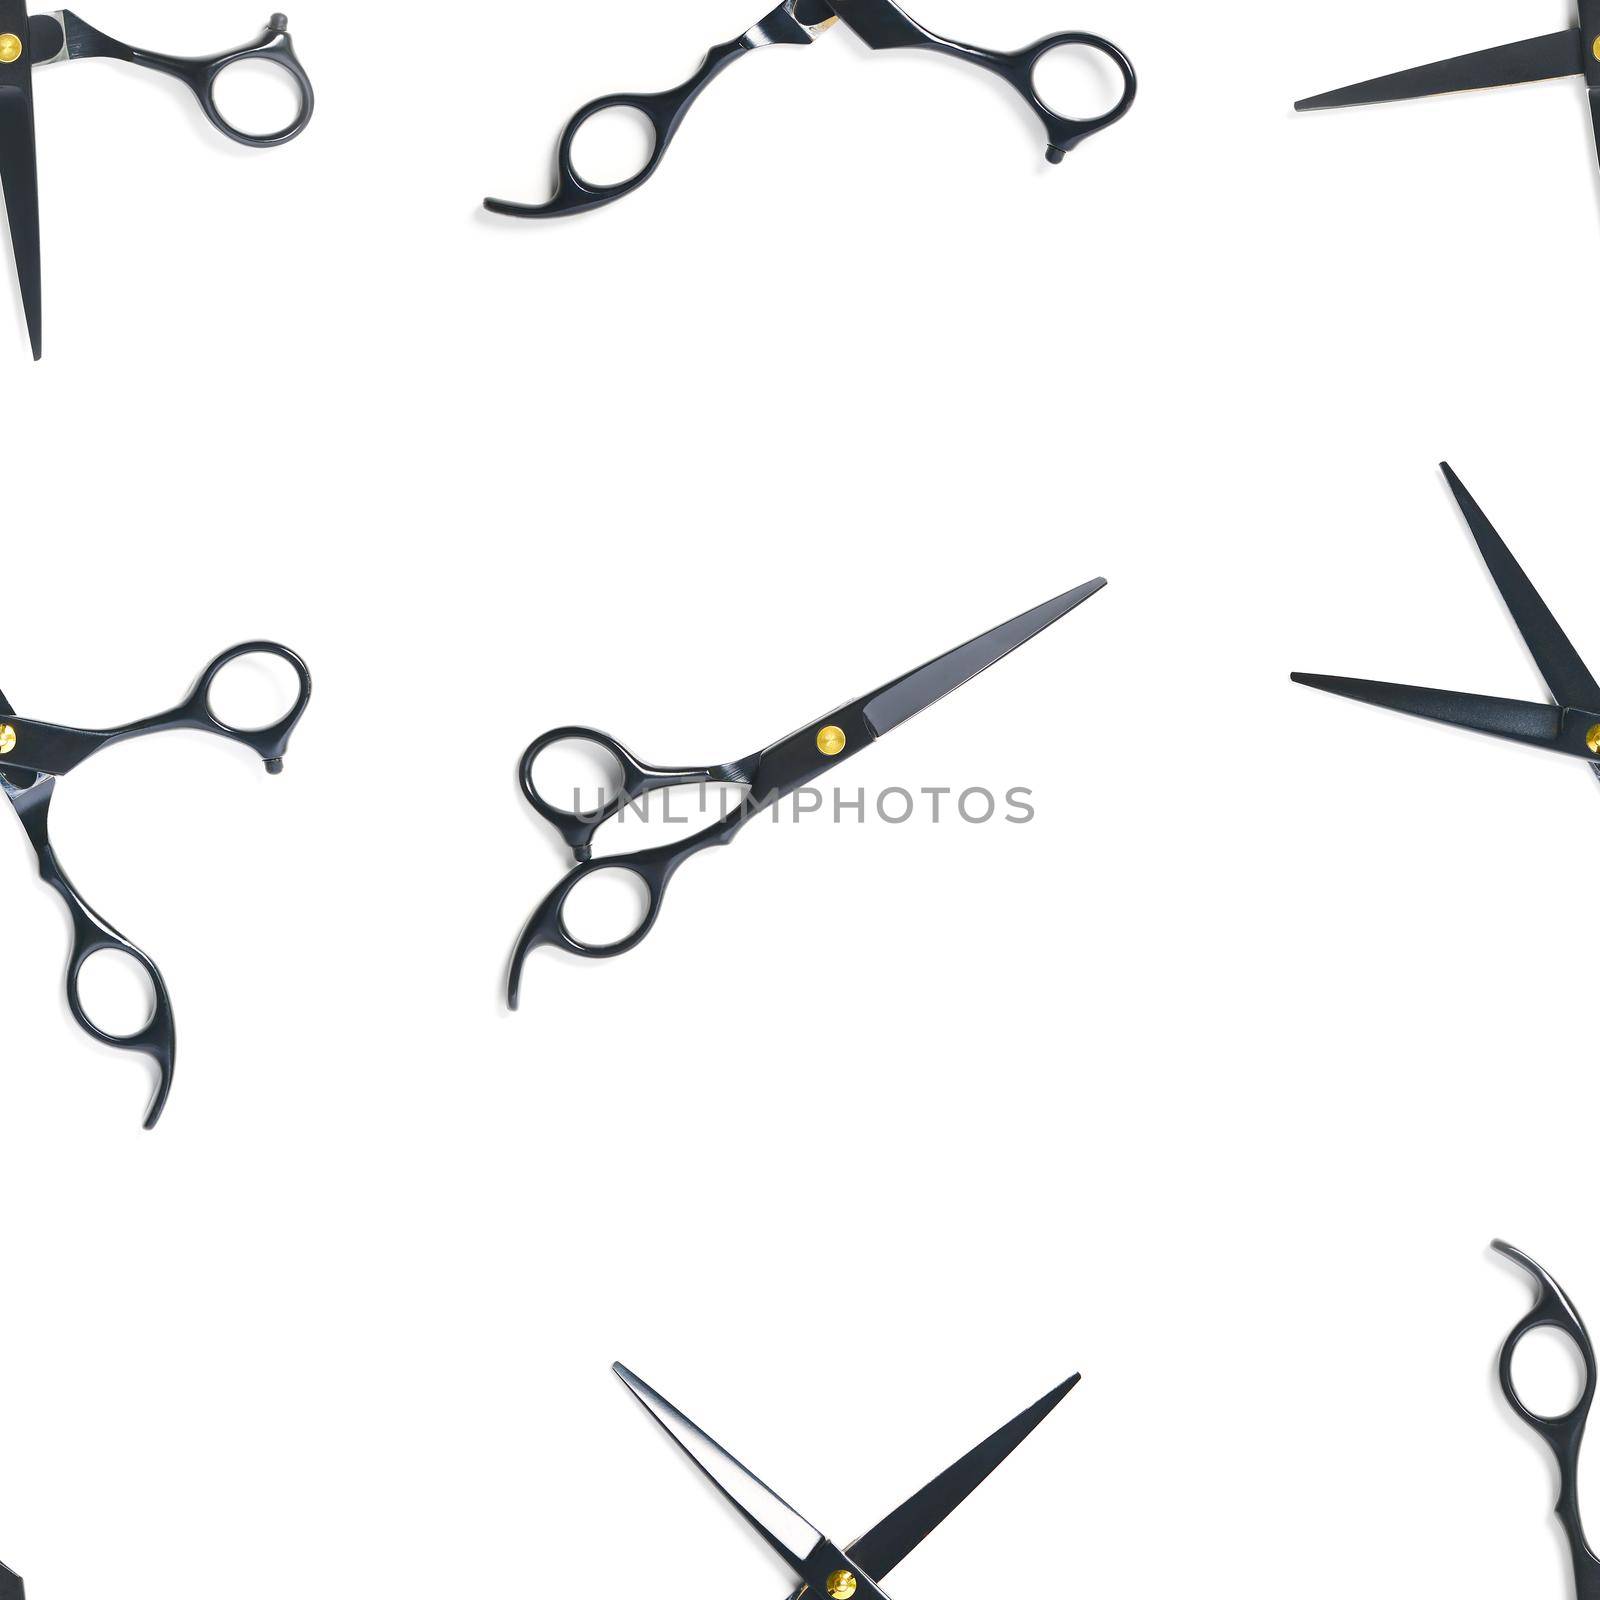 Seamless pattern of black scissors. professional hairdresser black scissors isolated on white. Black barber scissors, close up. pop art background by PhotoTime